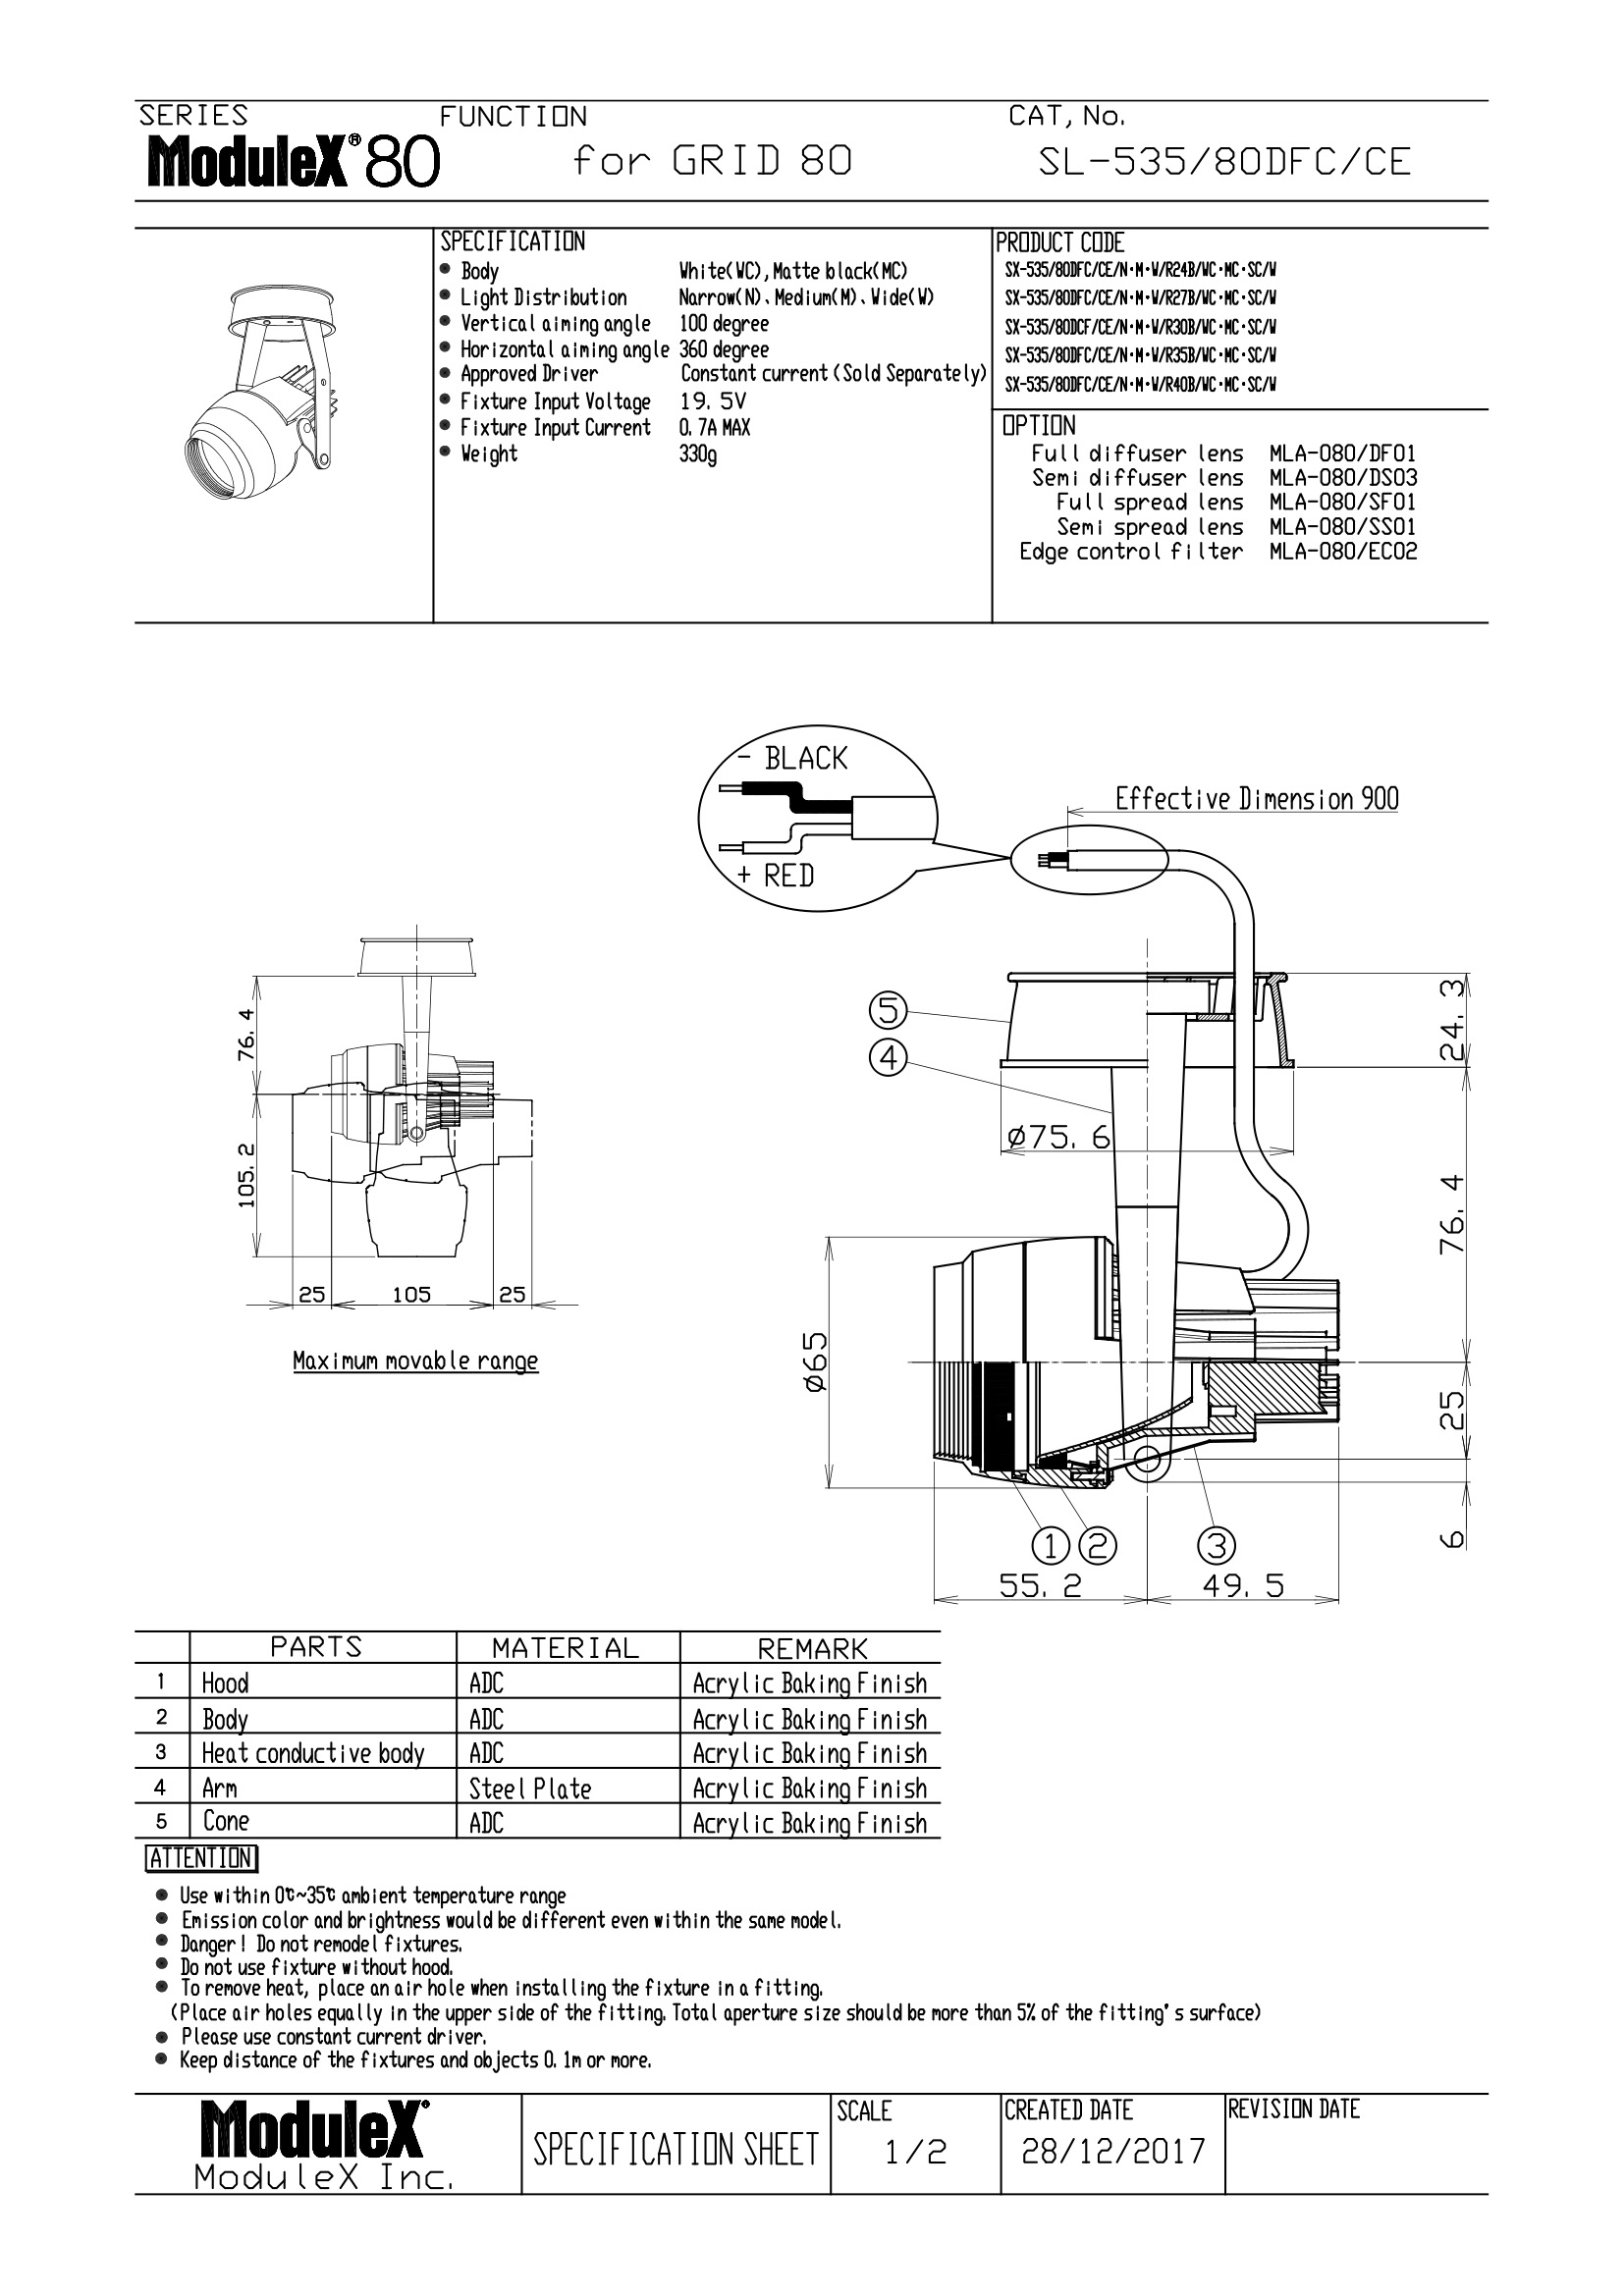 SL-535/80DFC Specification Sheet